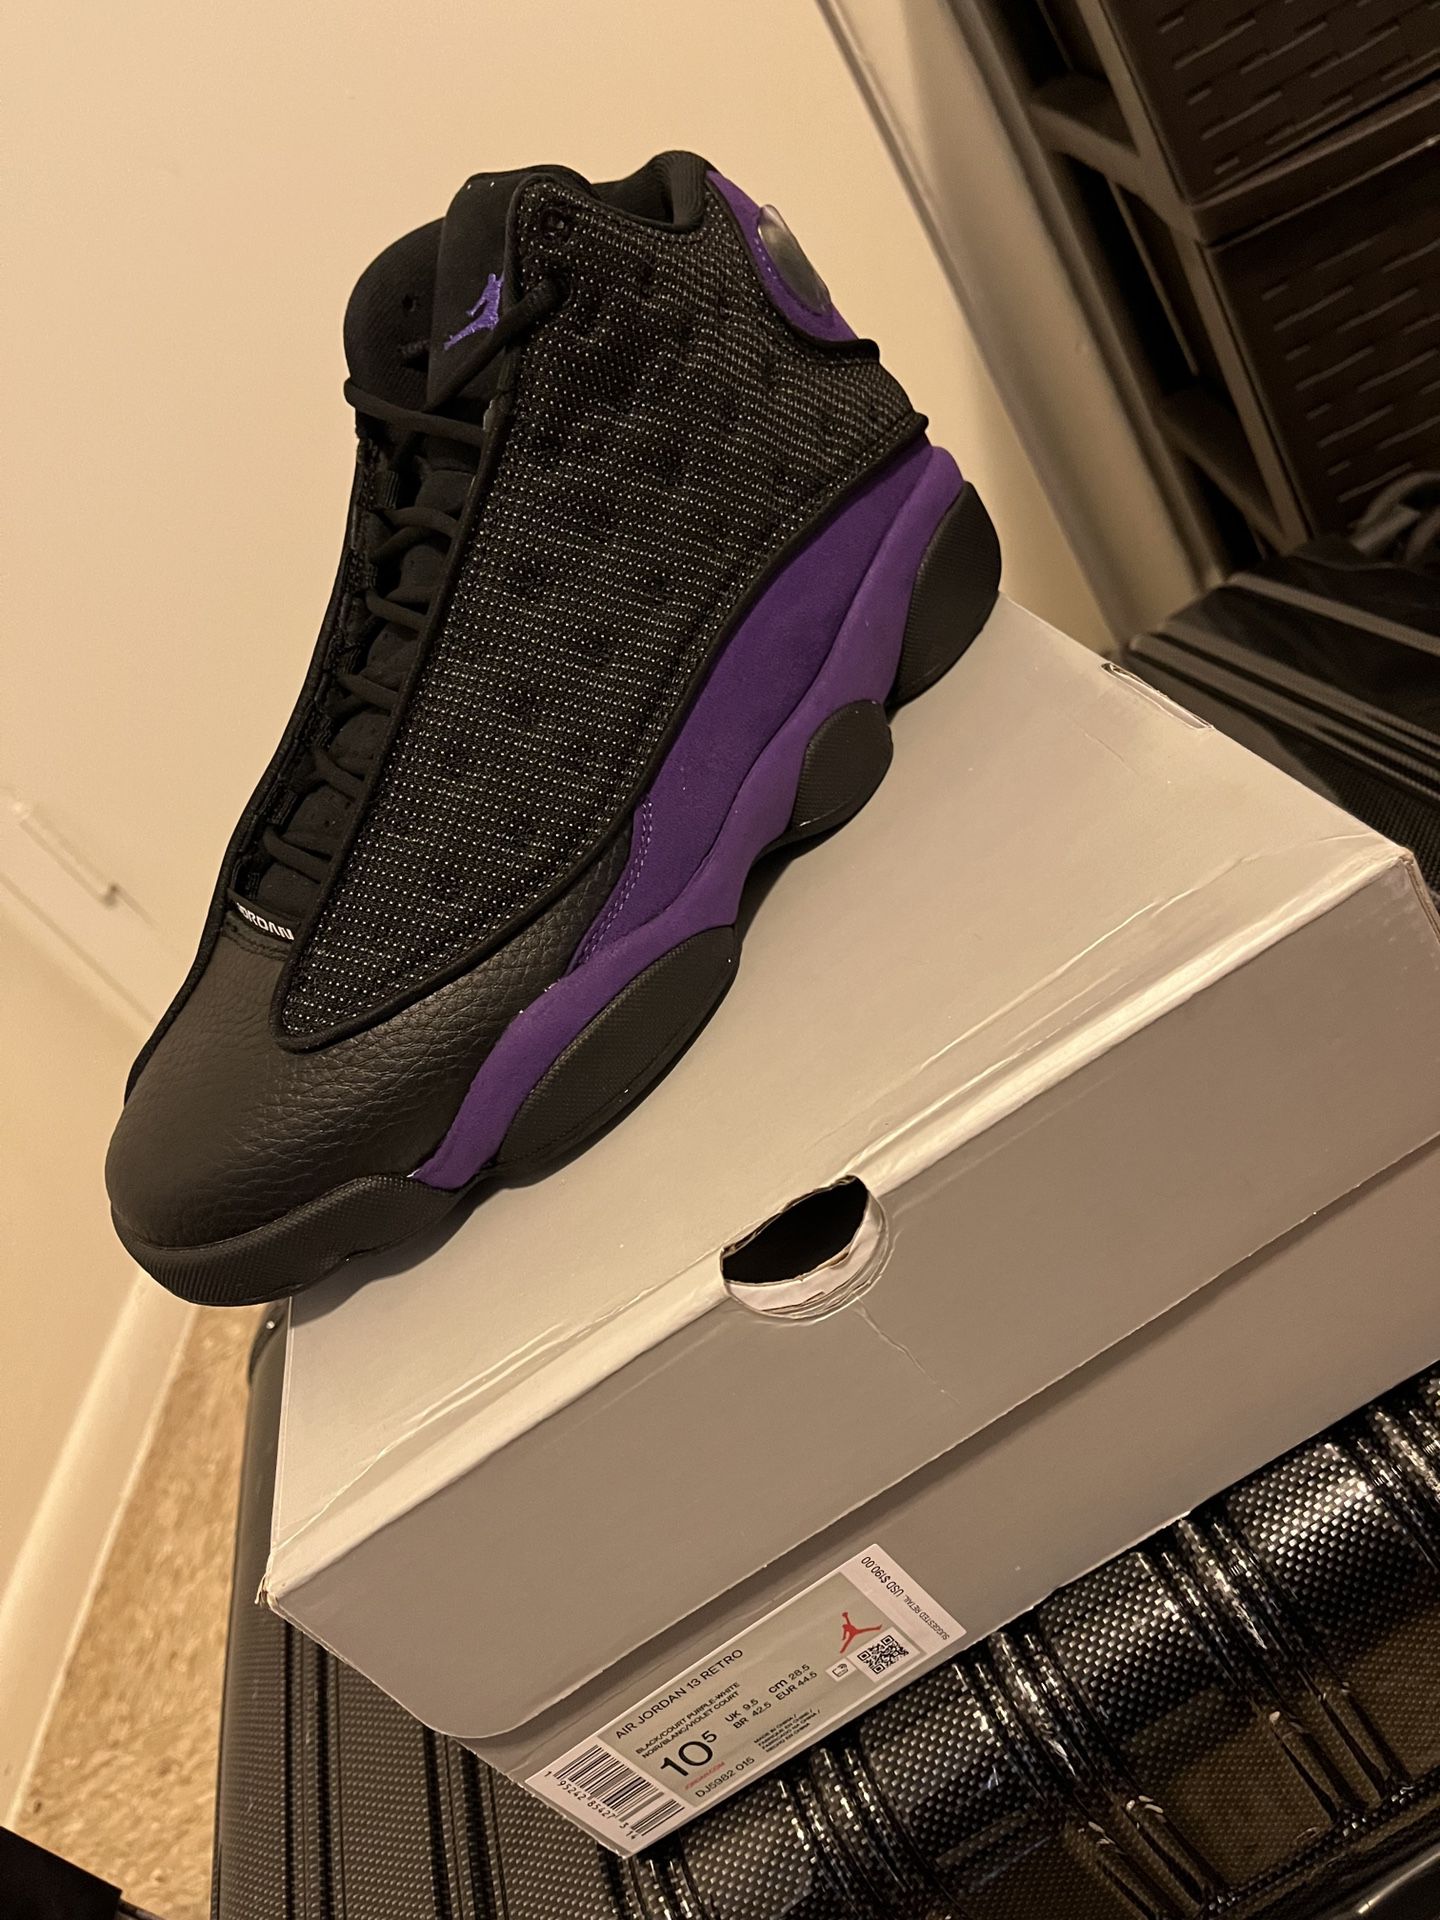 Black and Purple 13s